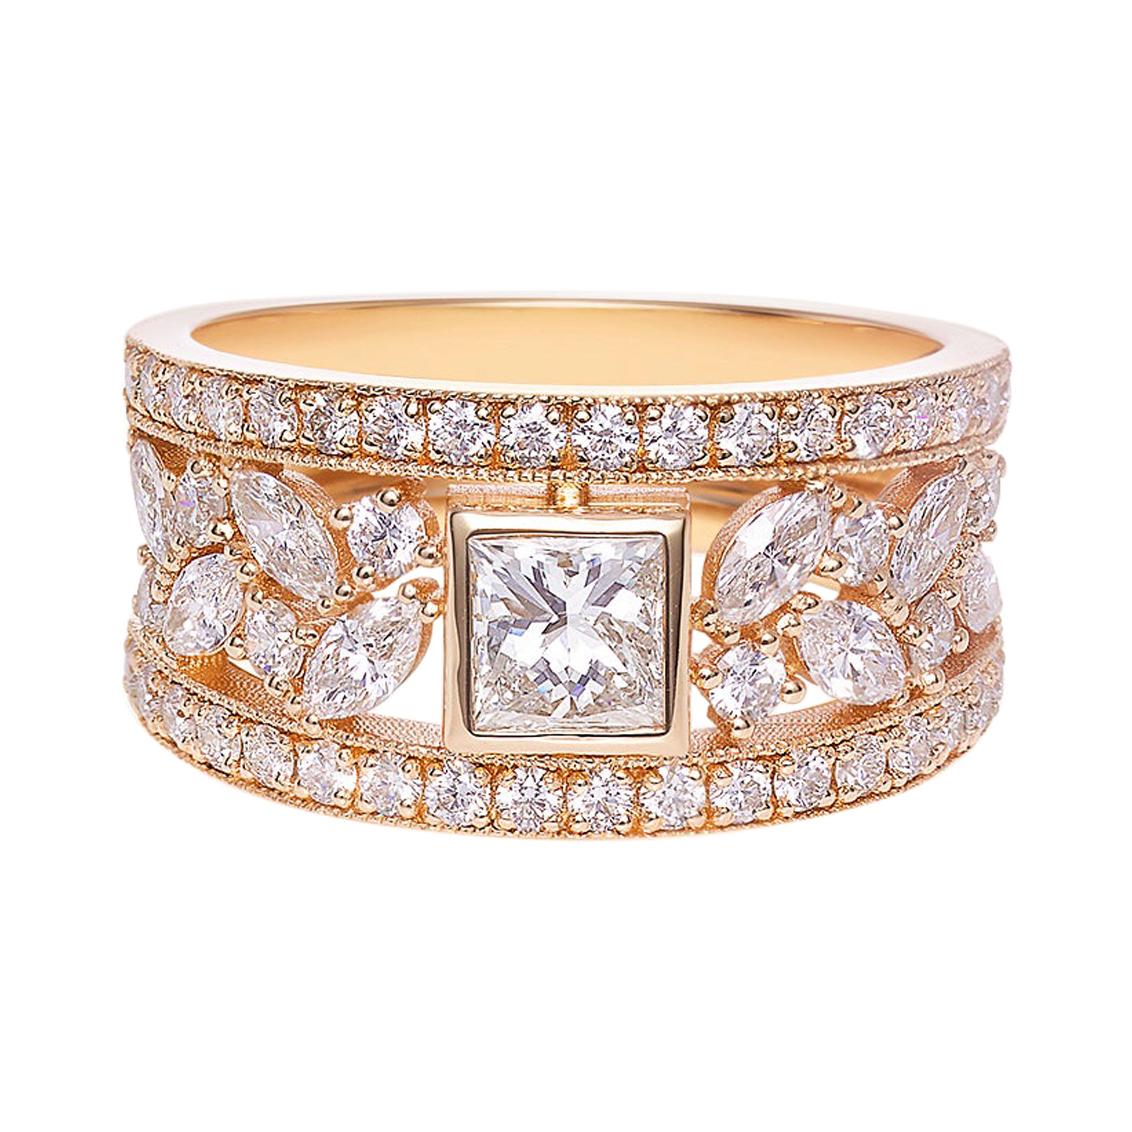 Princess Cut Diamond, Marquise Cut Diamond Unique Ring 18K Yellow Gold For Sale